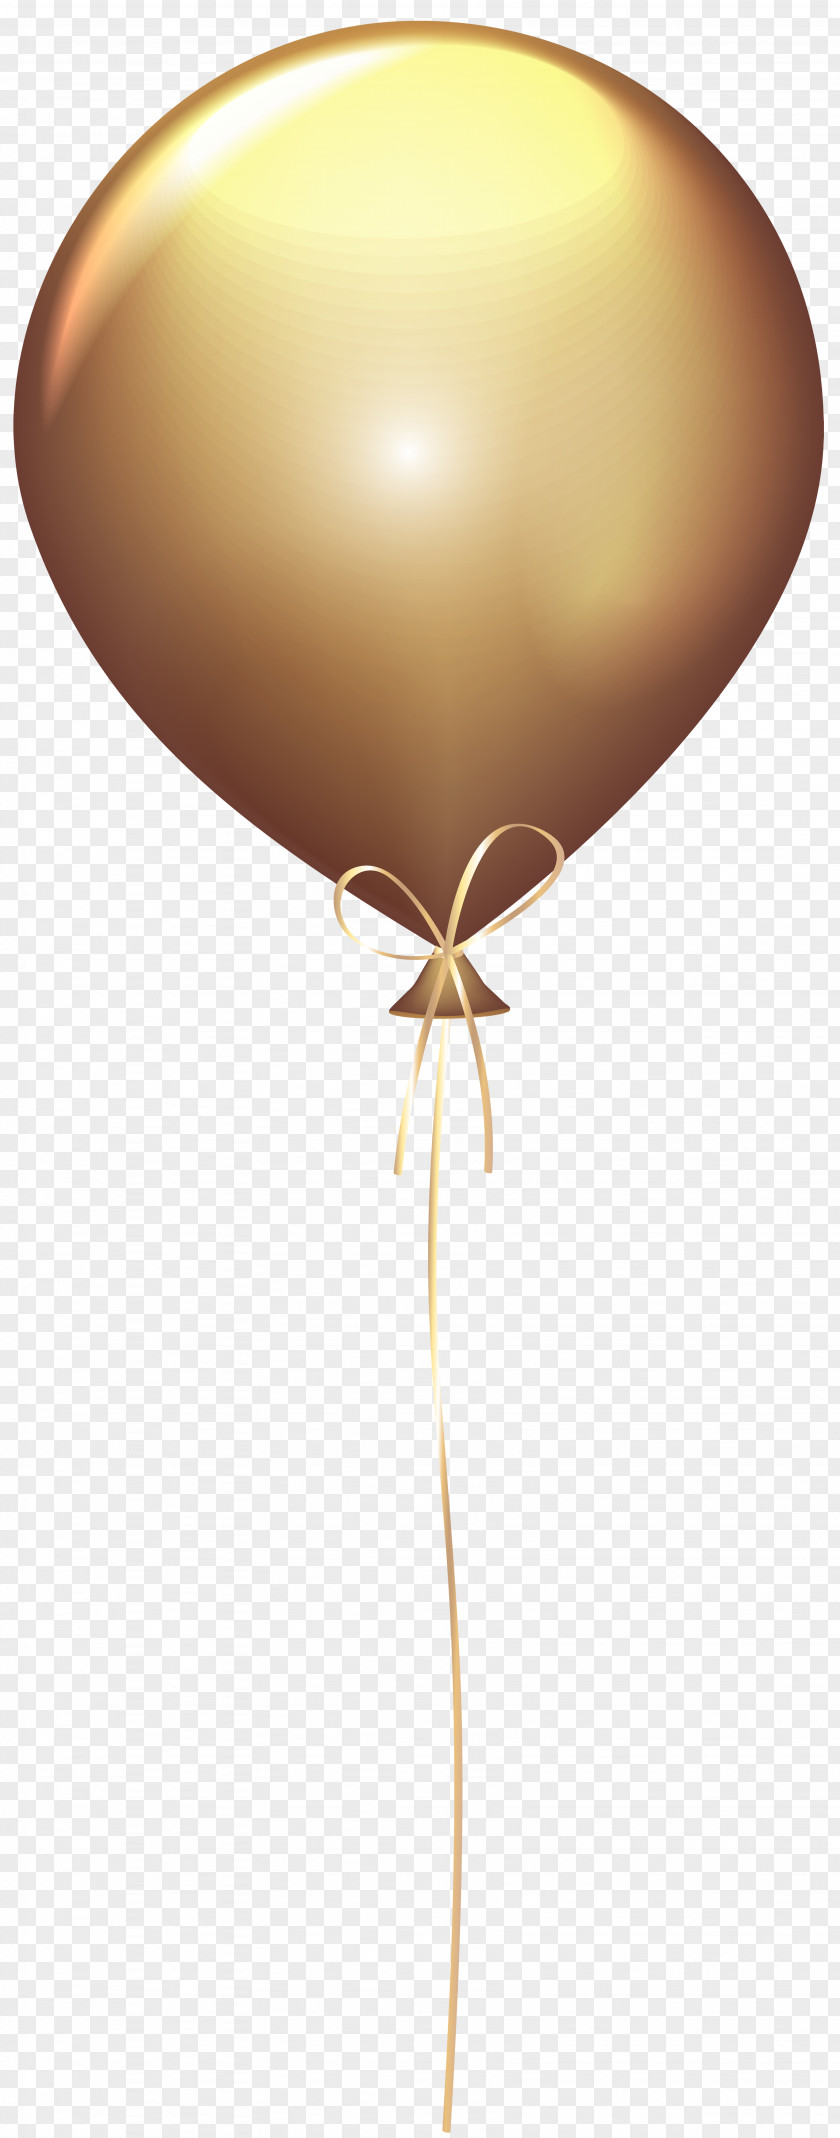 Gold Balloon Transparent Clip Art Image PNG